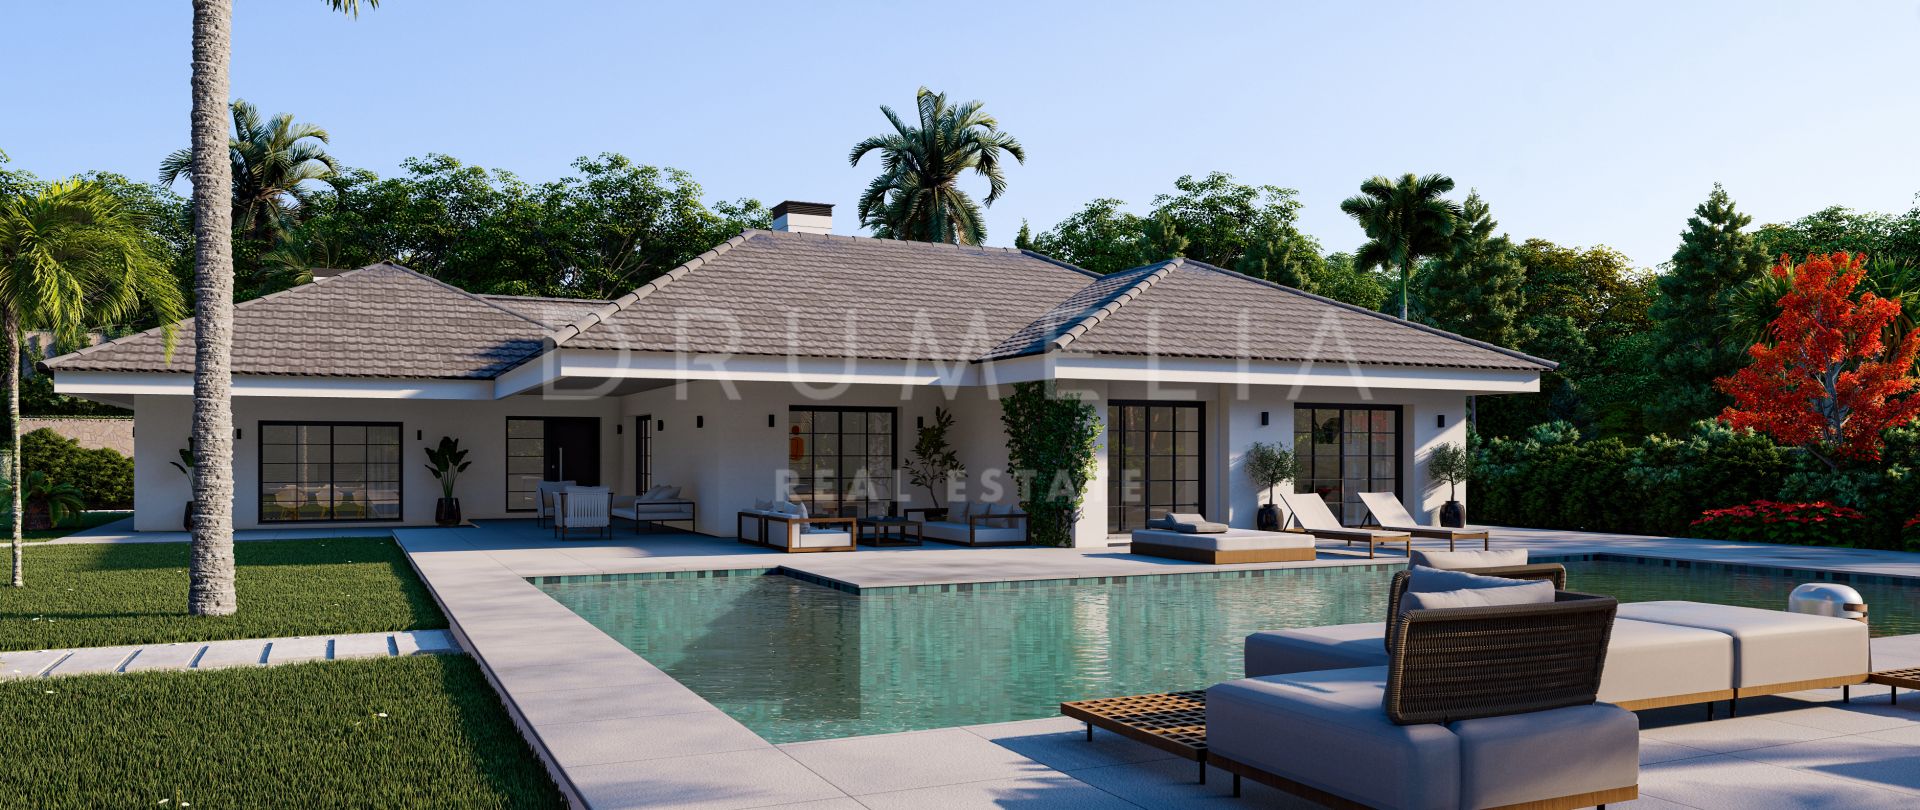 Charmante renovierte Luxusvilla mit Tennisplatz und Pool in El Real Panorama, Marbella Ost